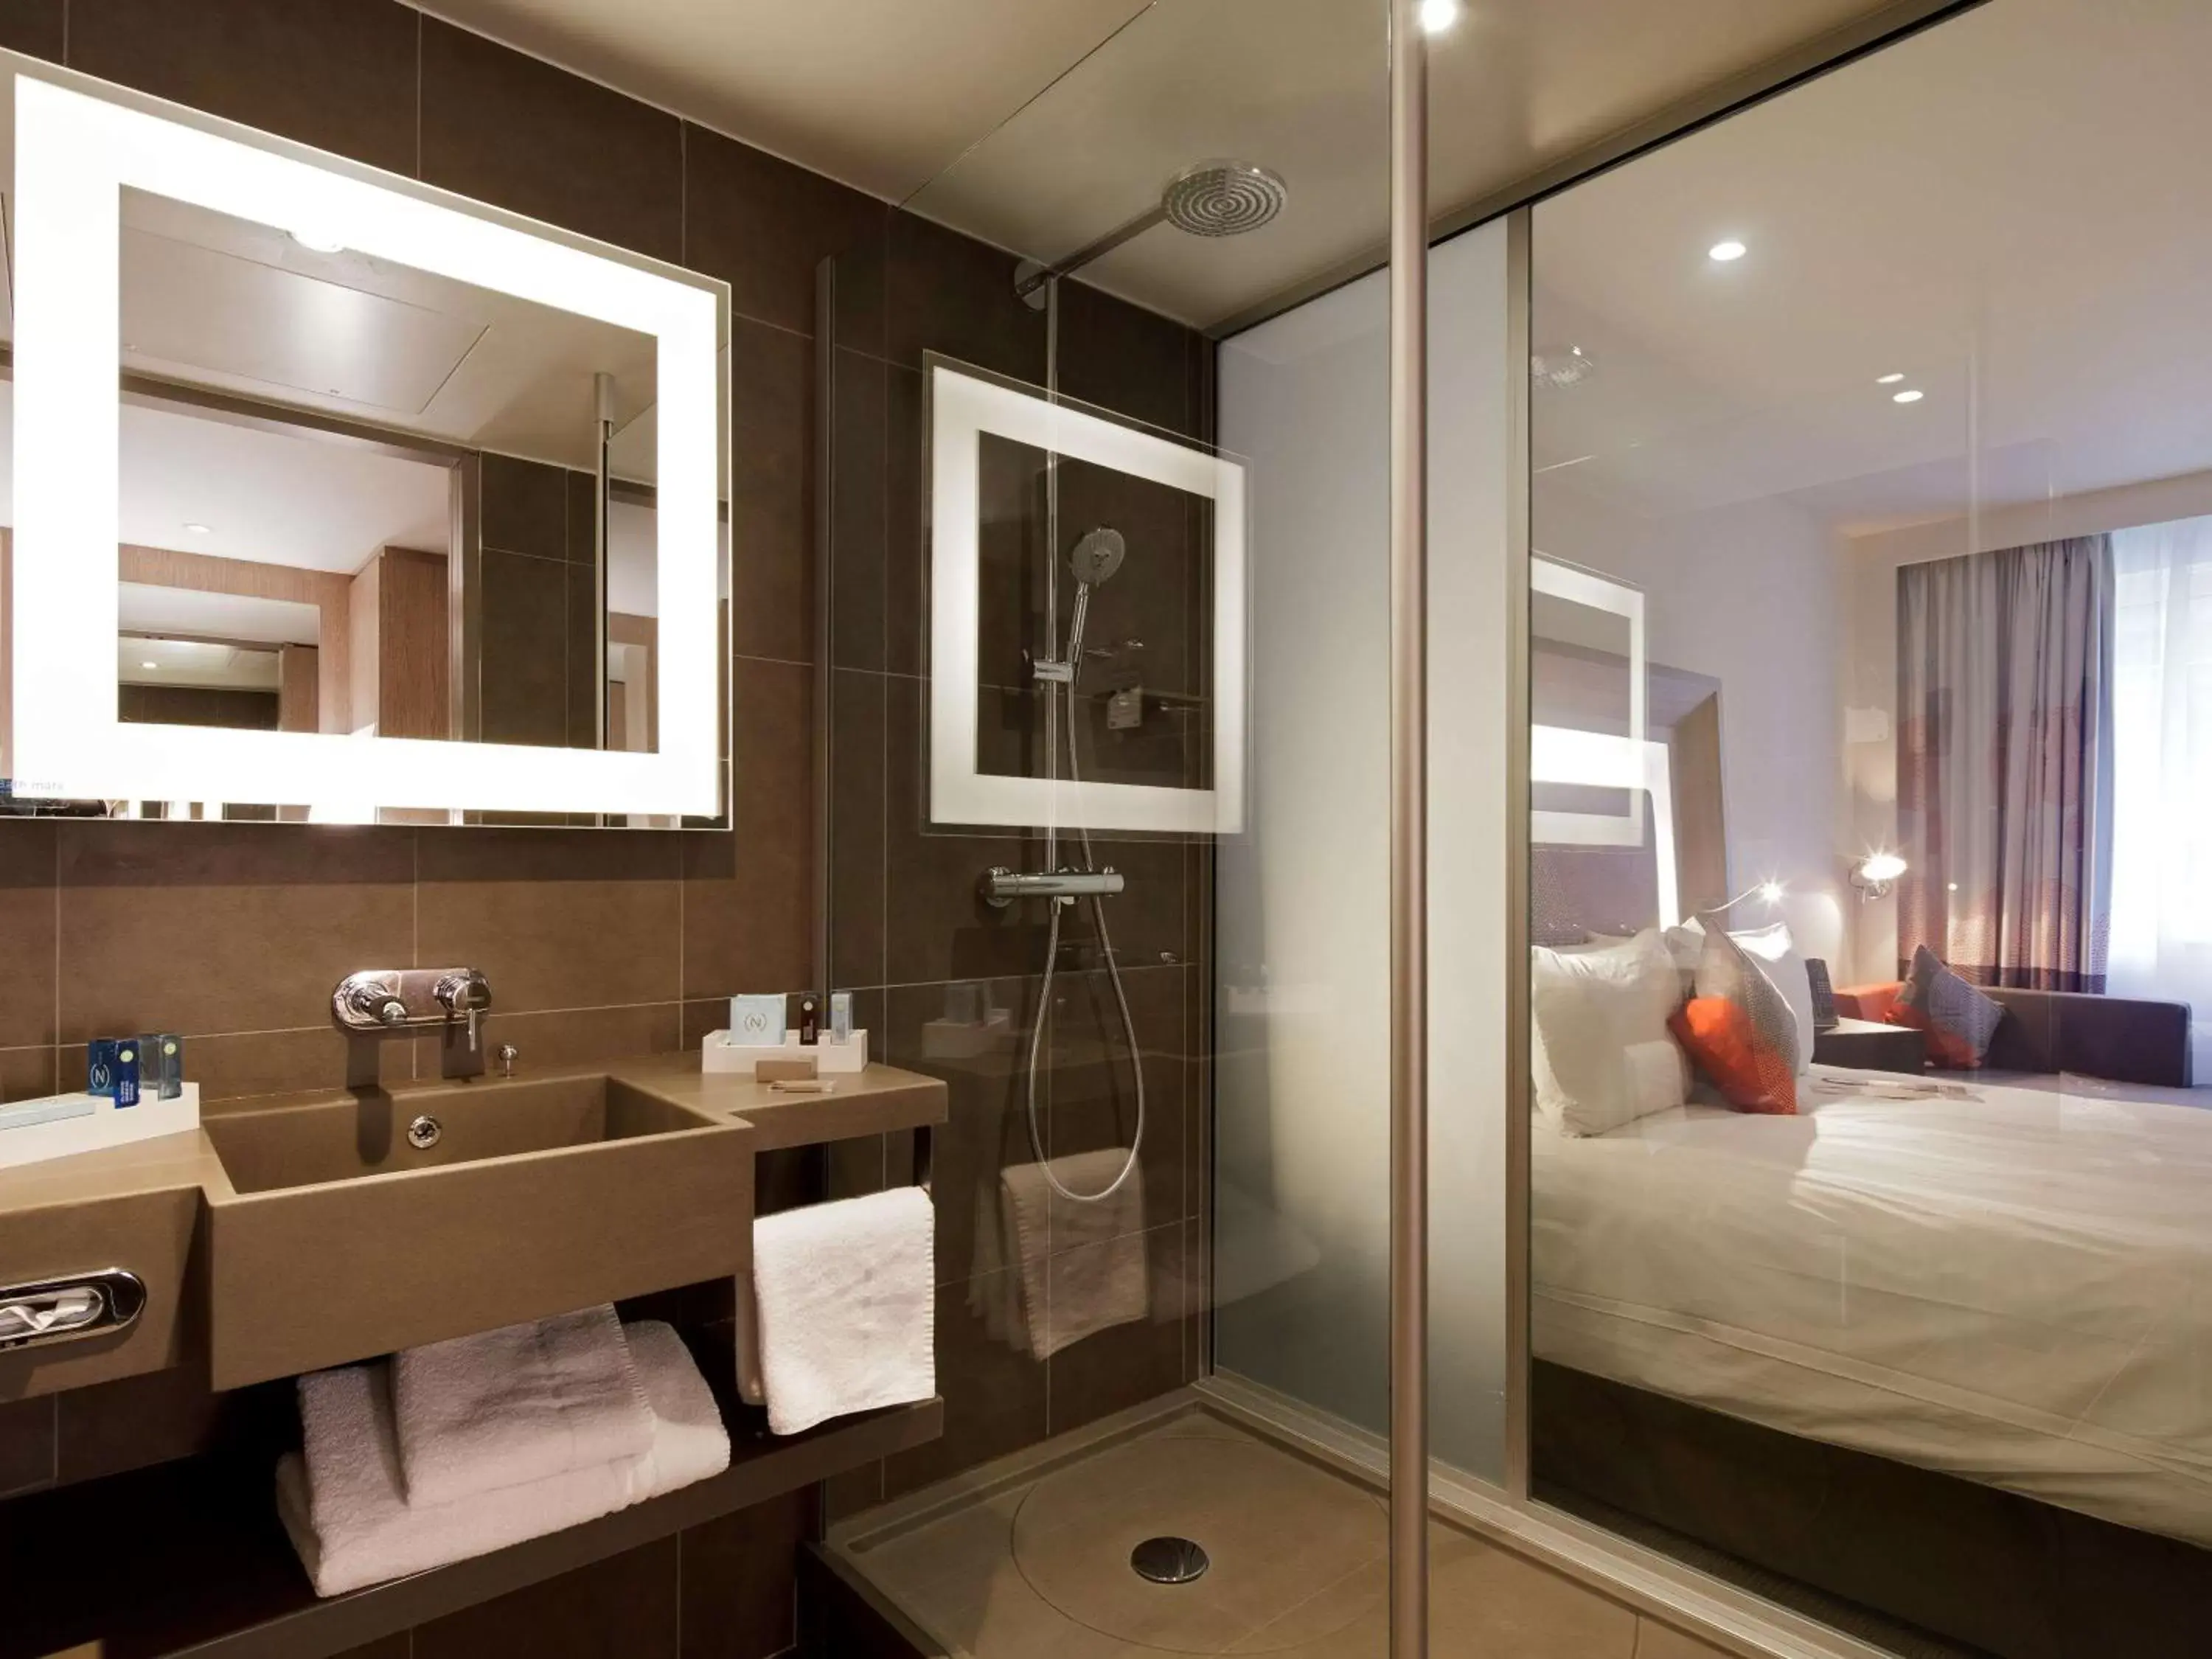 Photo of the whole room, Bathroom in Novotel London Tower Bridge